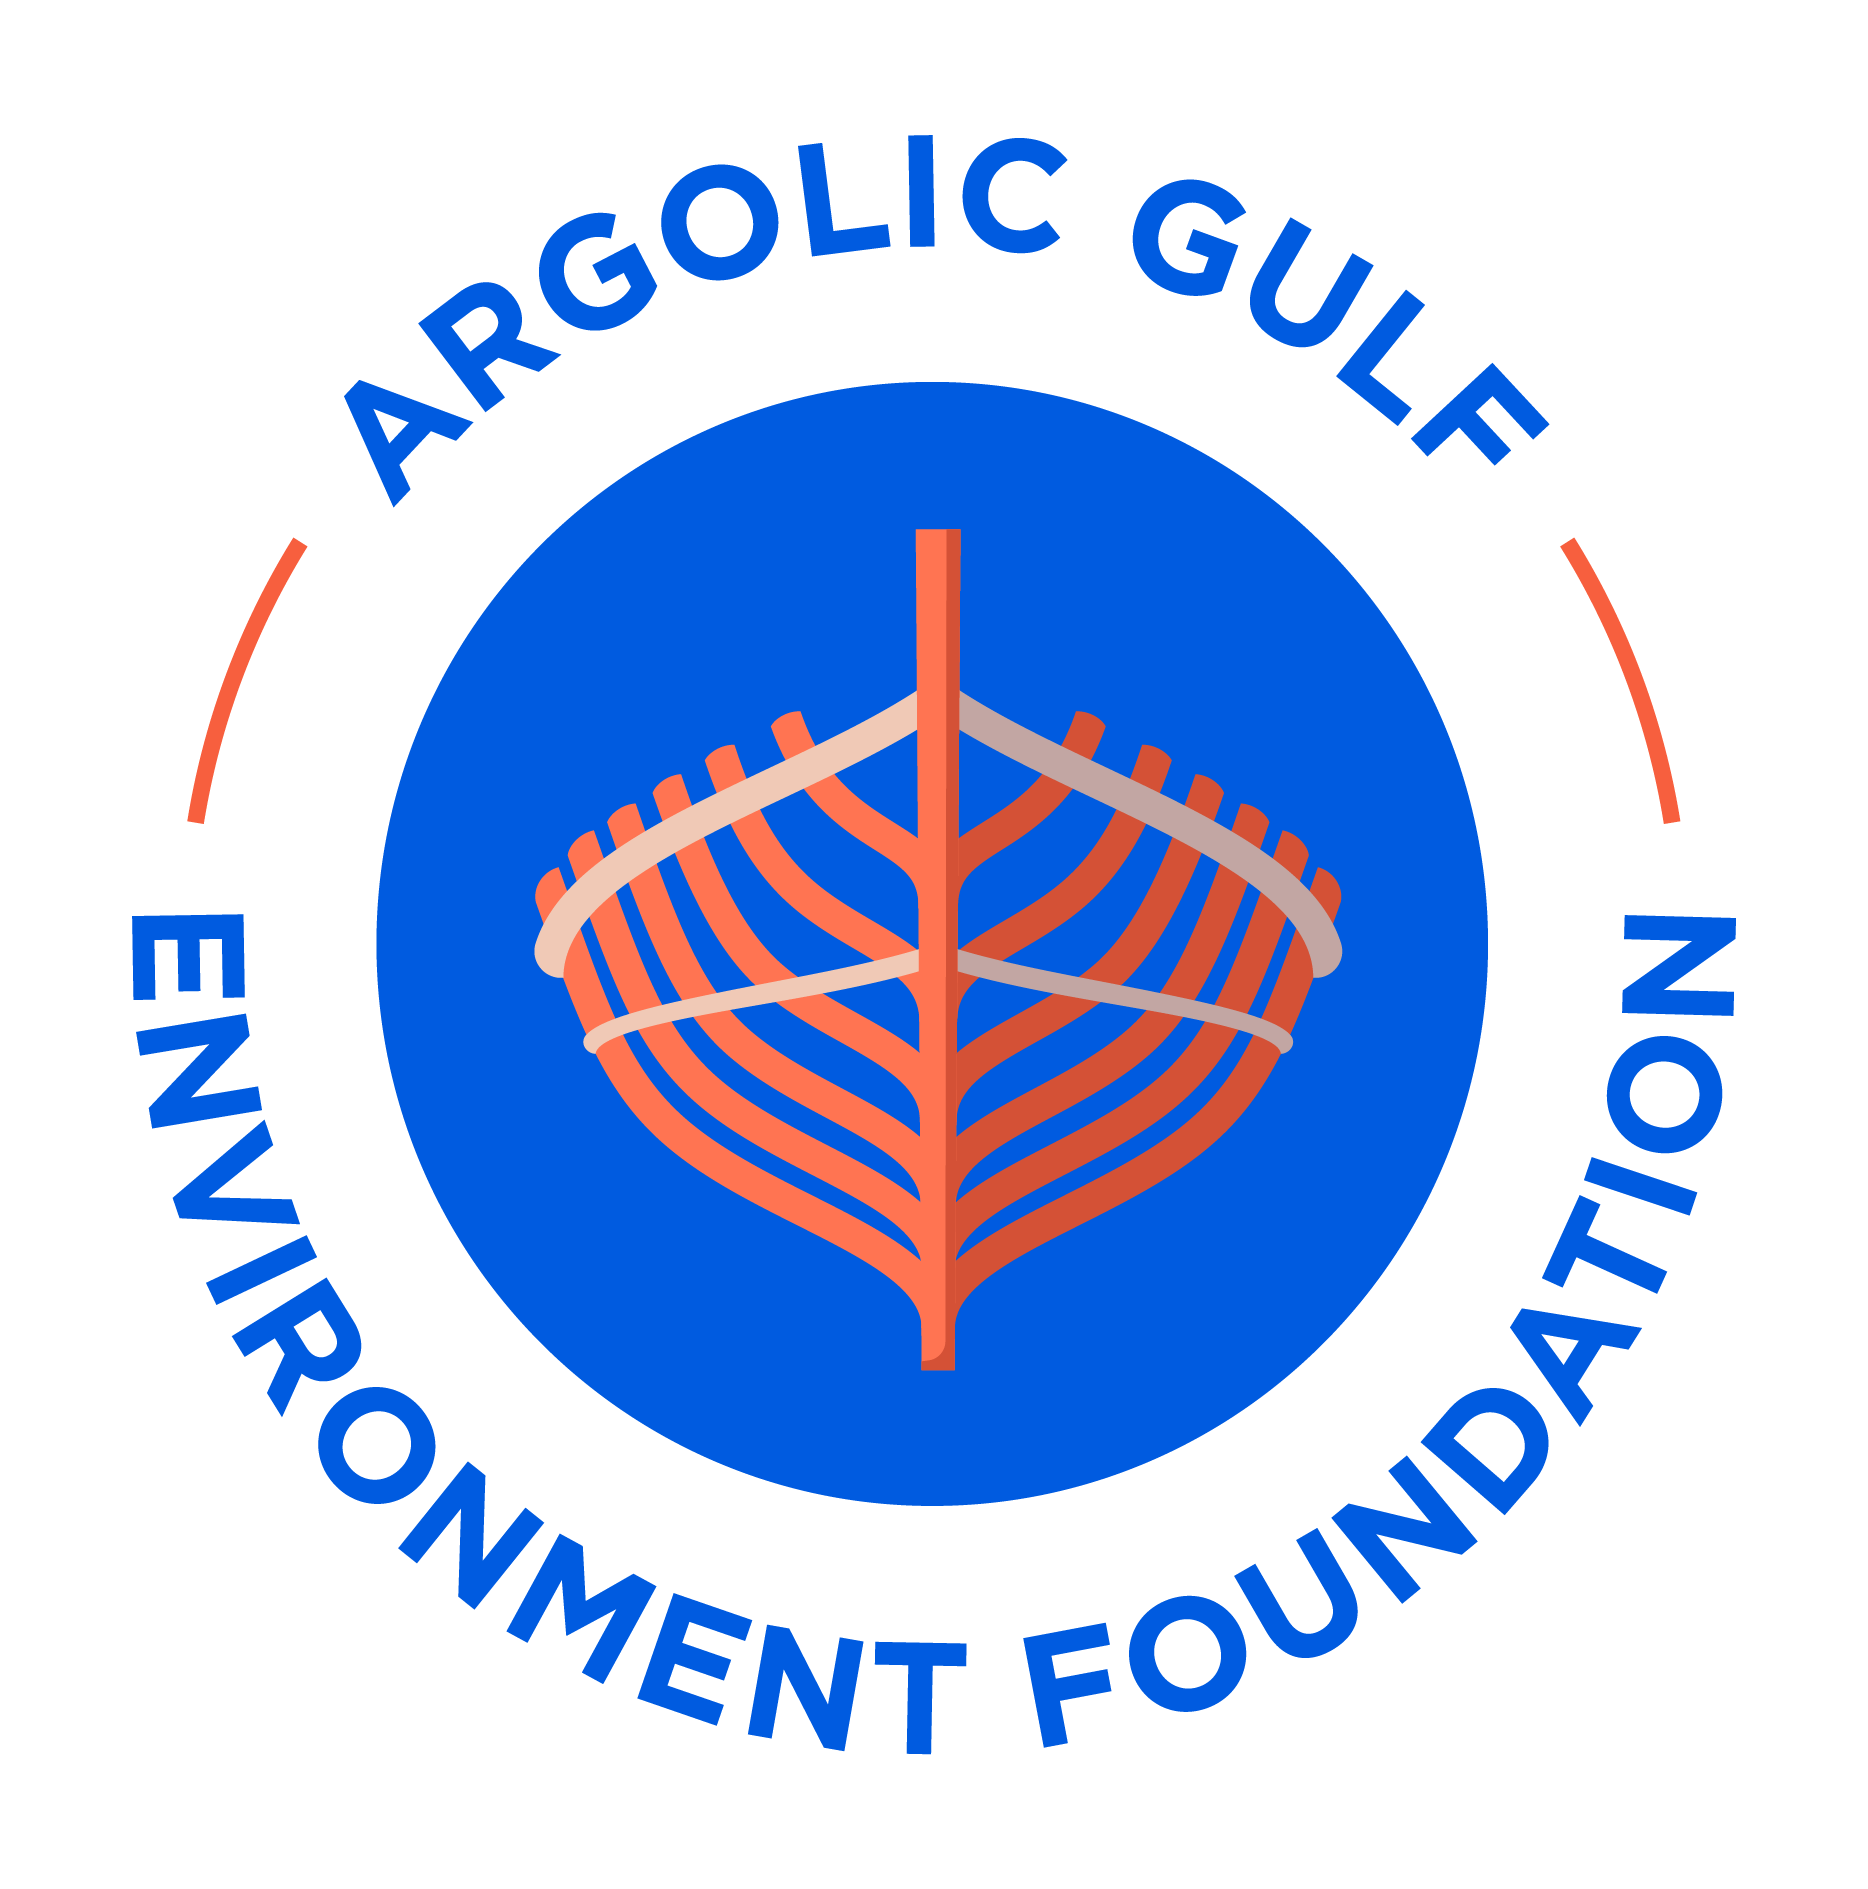 Argolic Gulf Environment Foundation